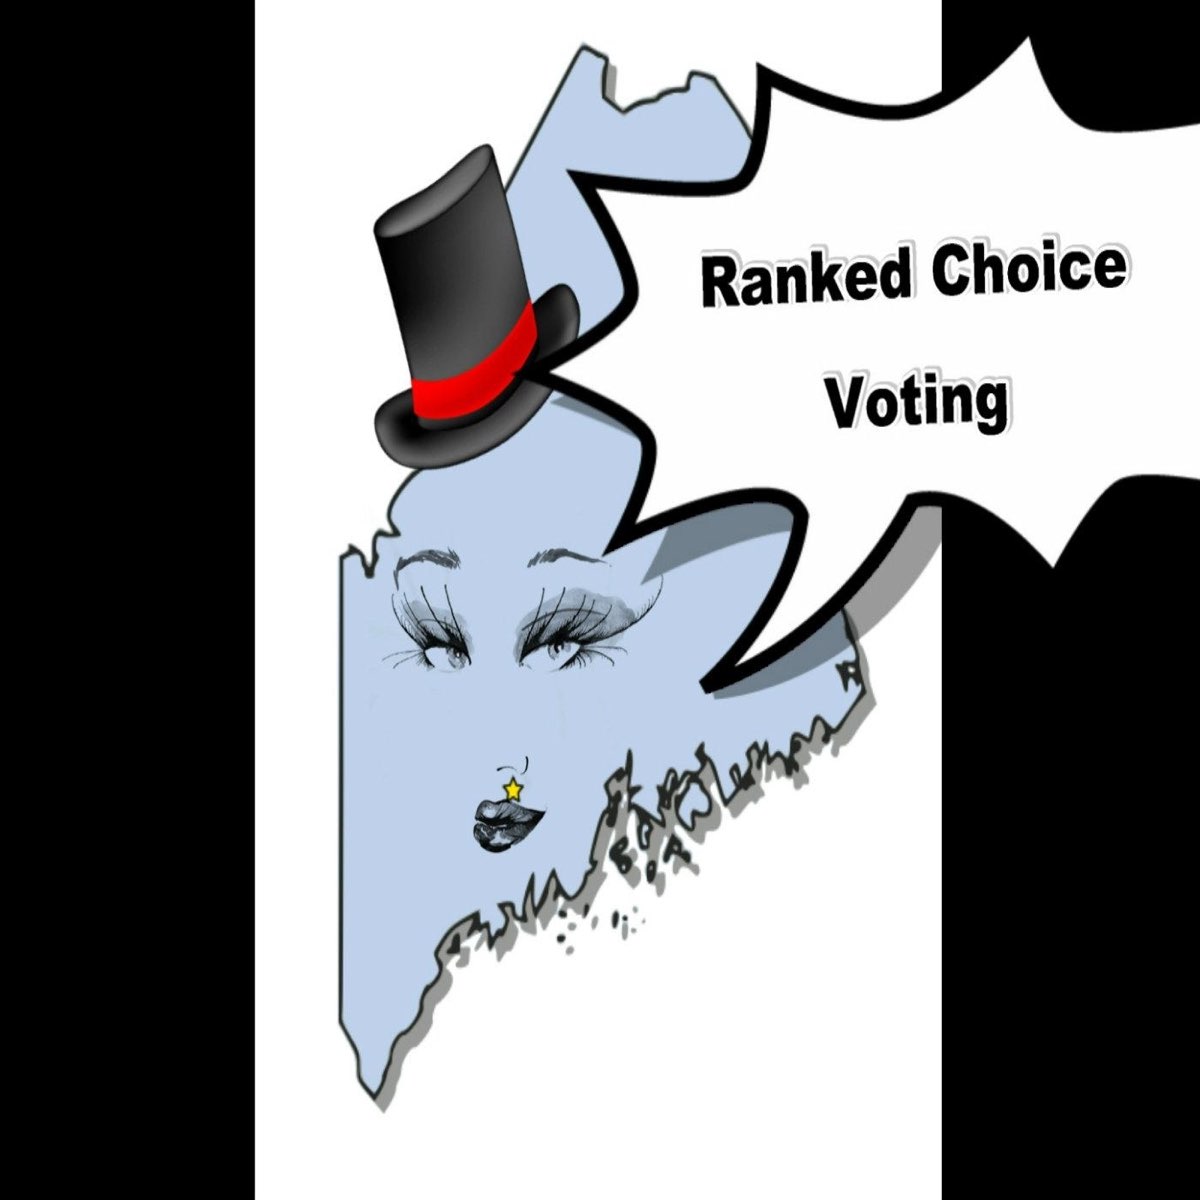 King choice voting